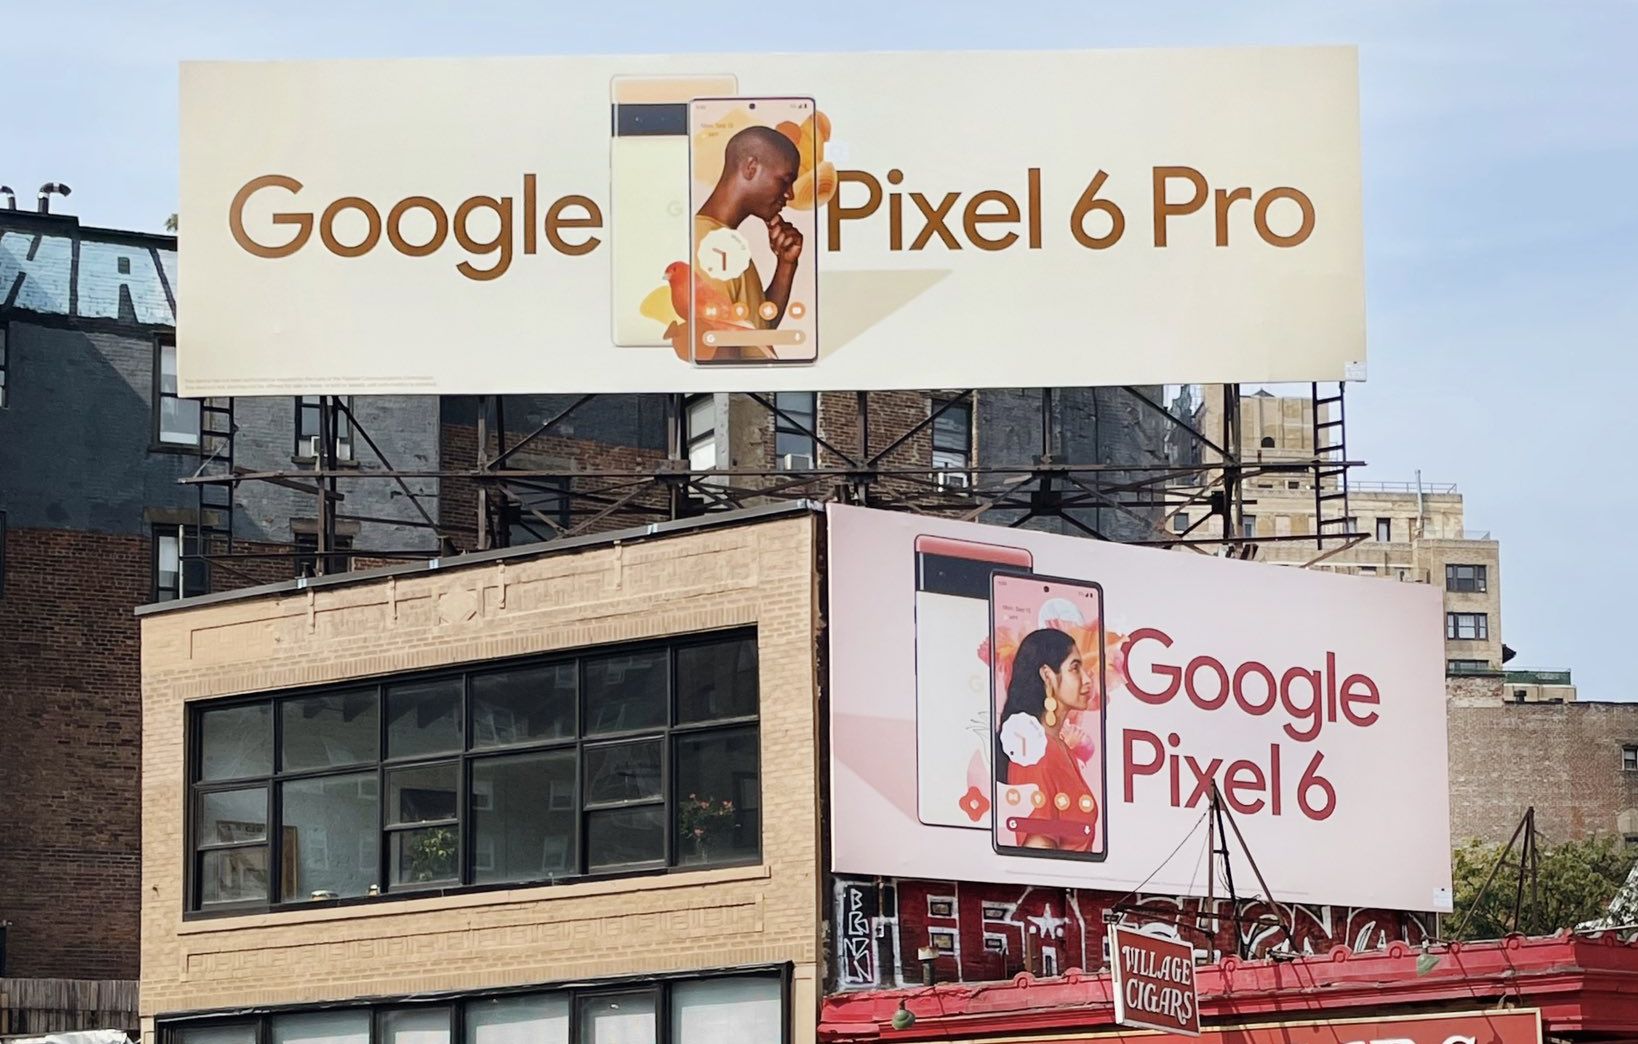 Pixel 6 pro billboards